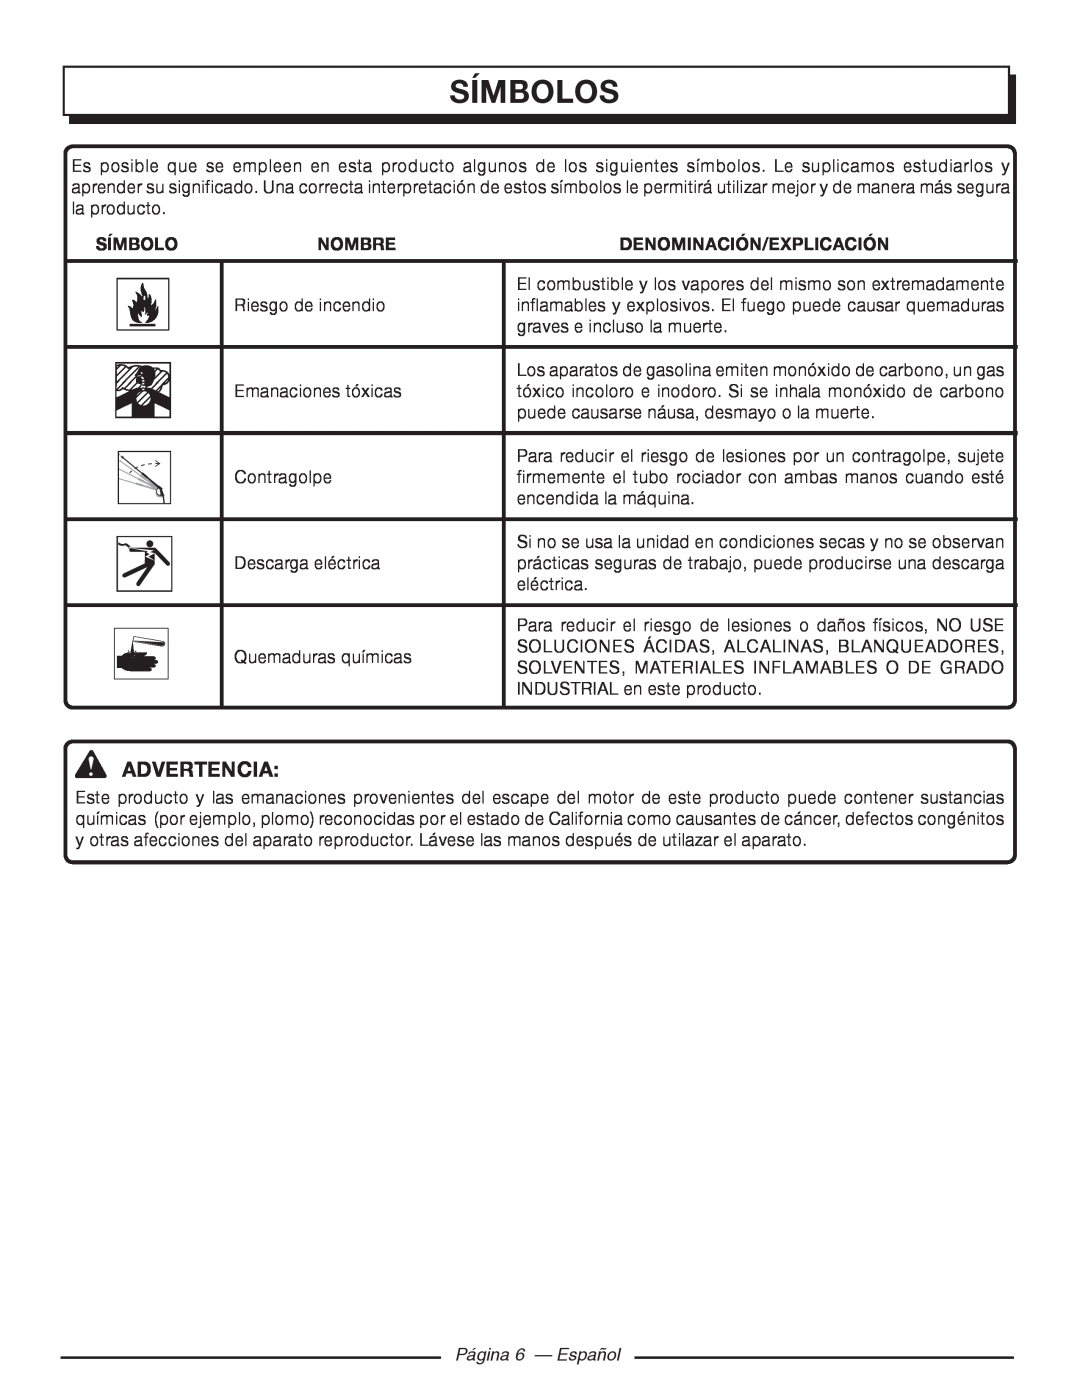 Homelite UT80977, UT80546 manuel dutilisation Página 6 - Español, Símbolos, Advertencia 